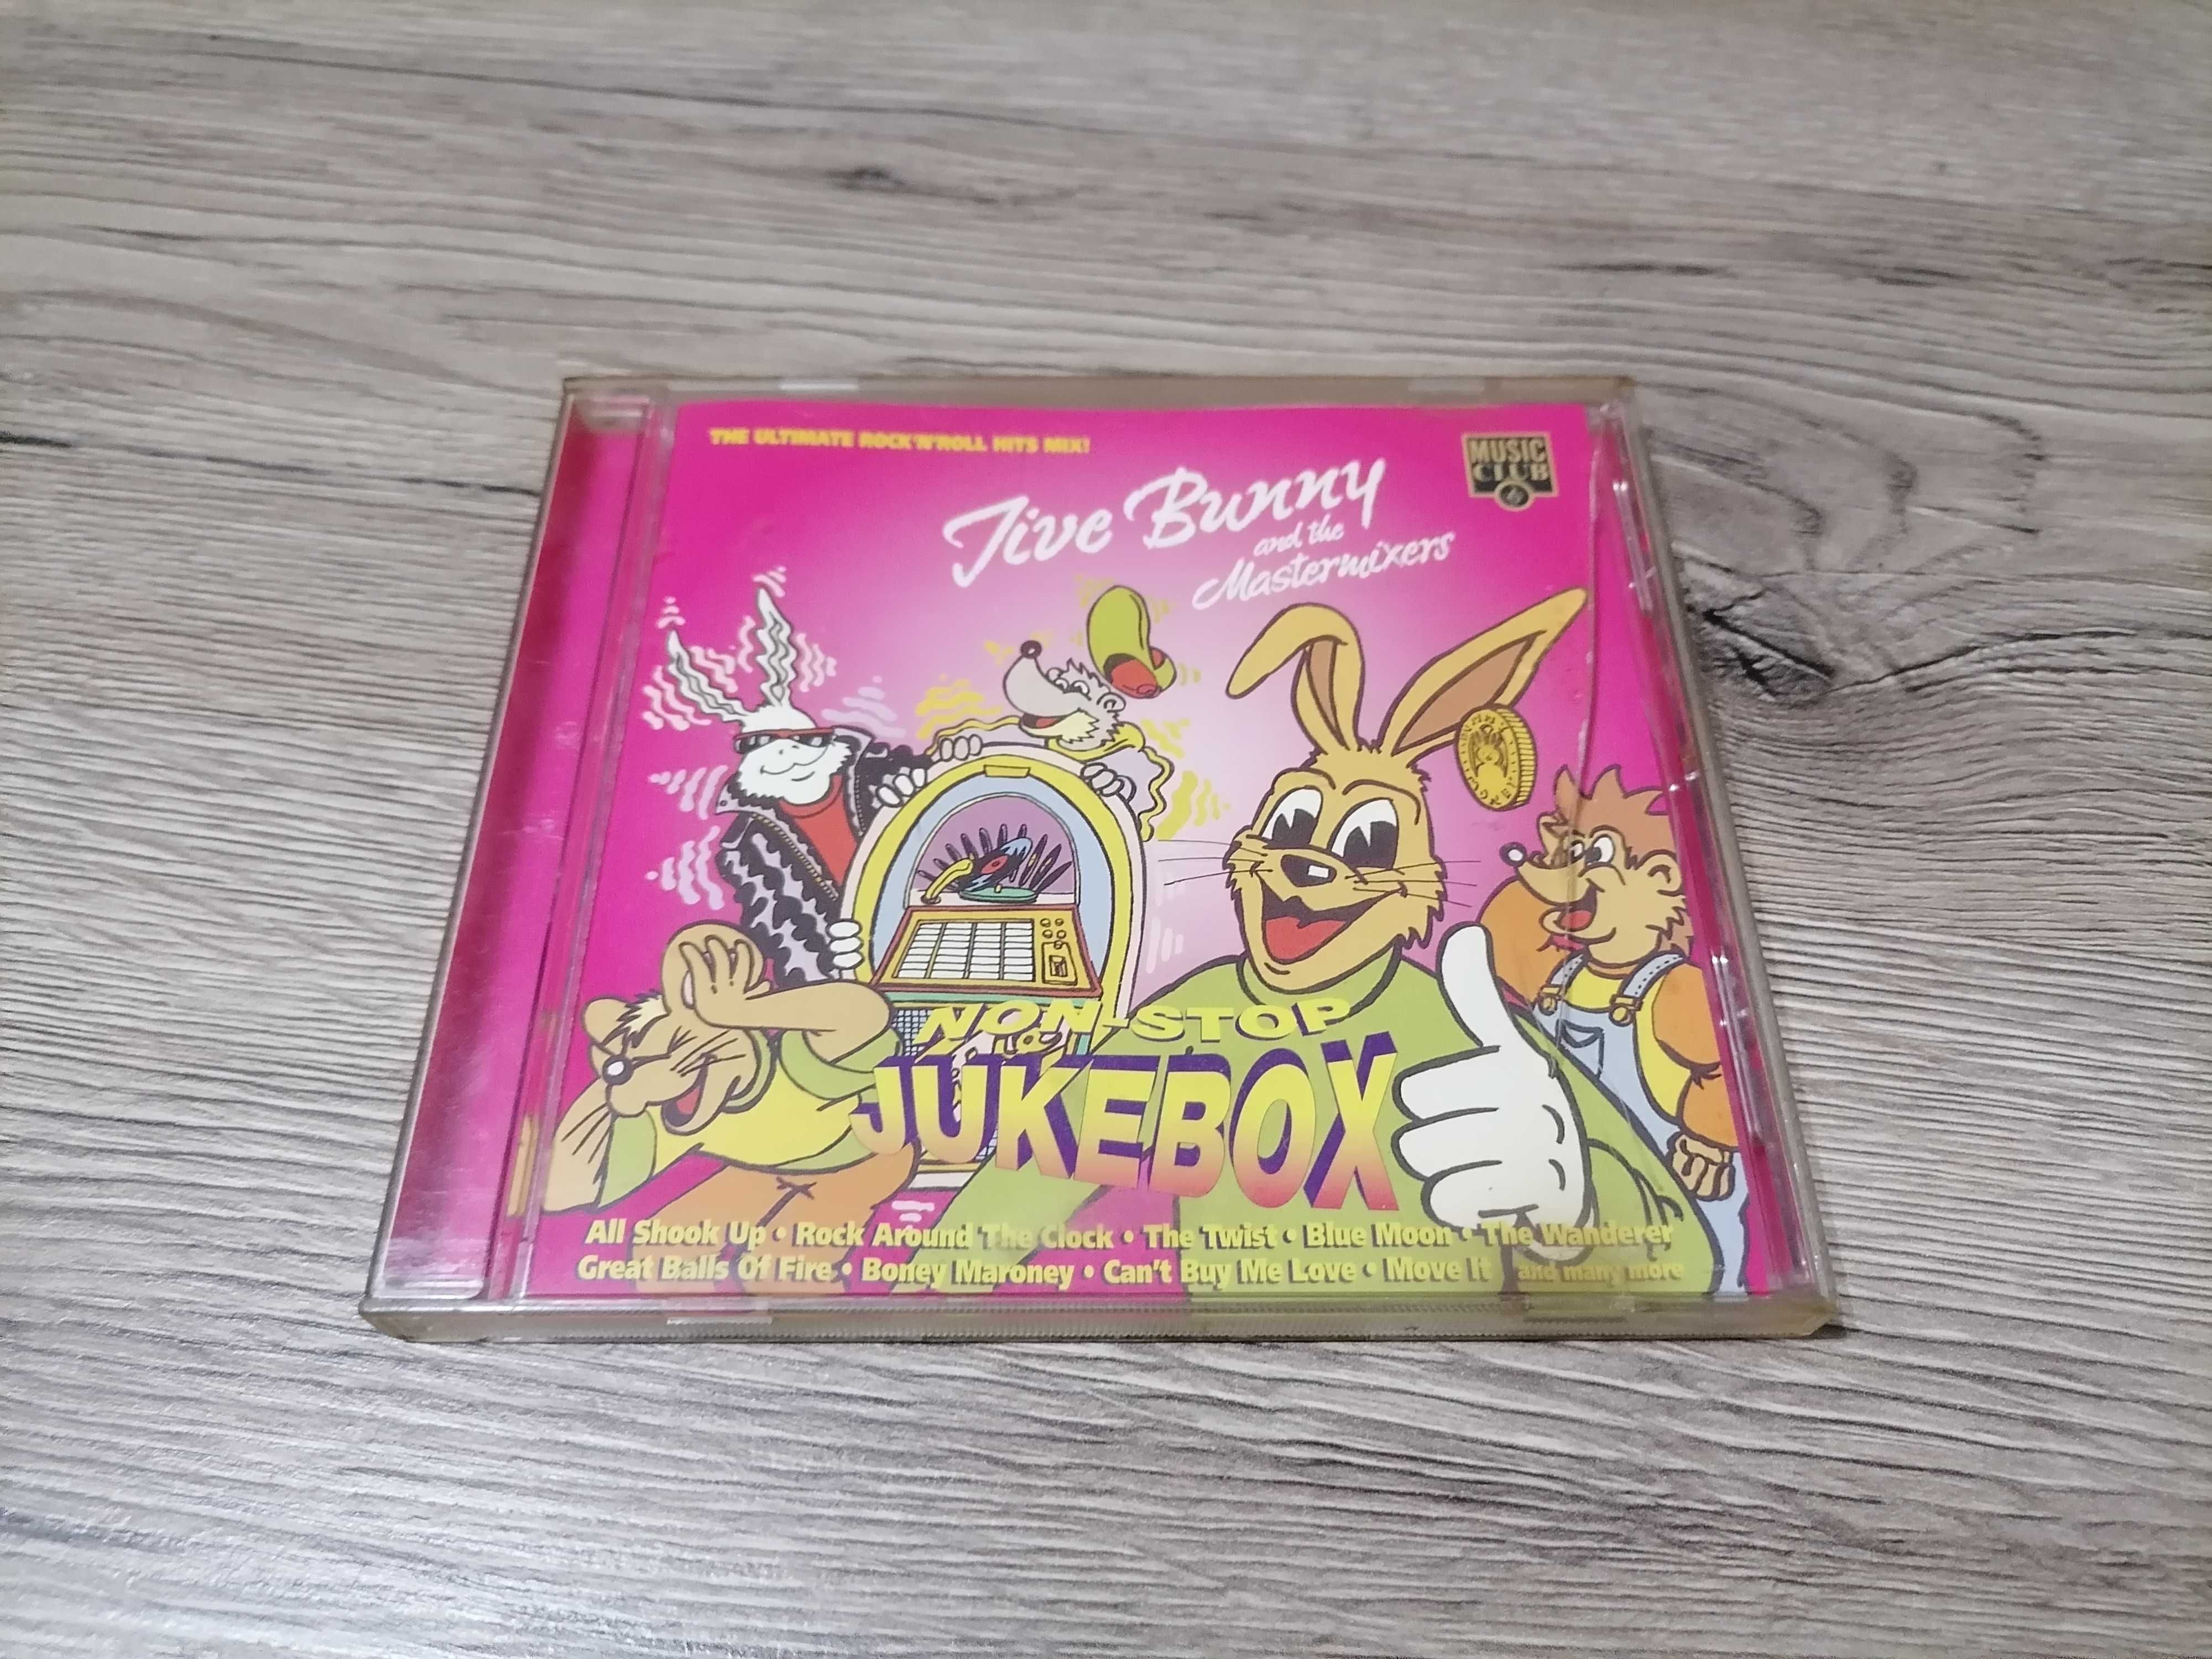 Jive Bunny And The Mastermixers – Non-Stop Juke Box CD